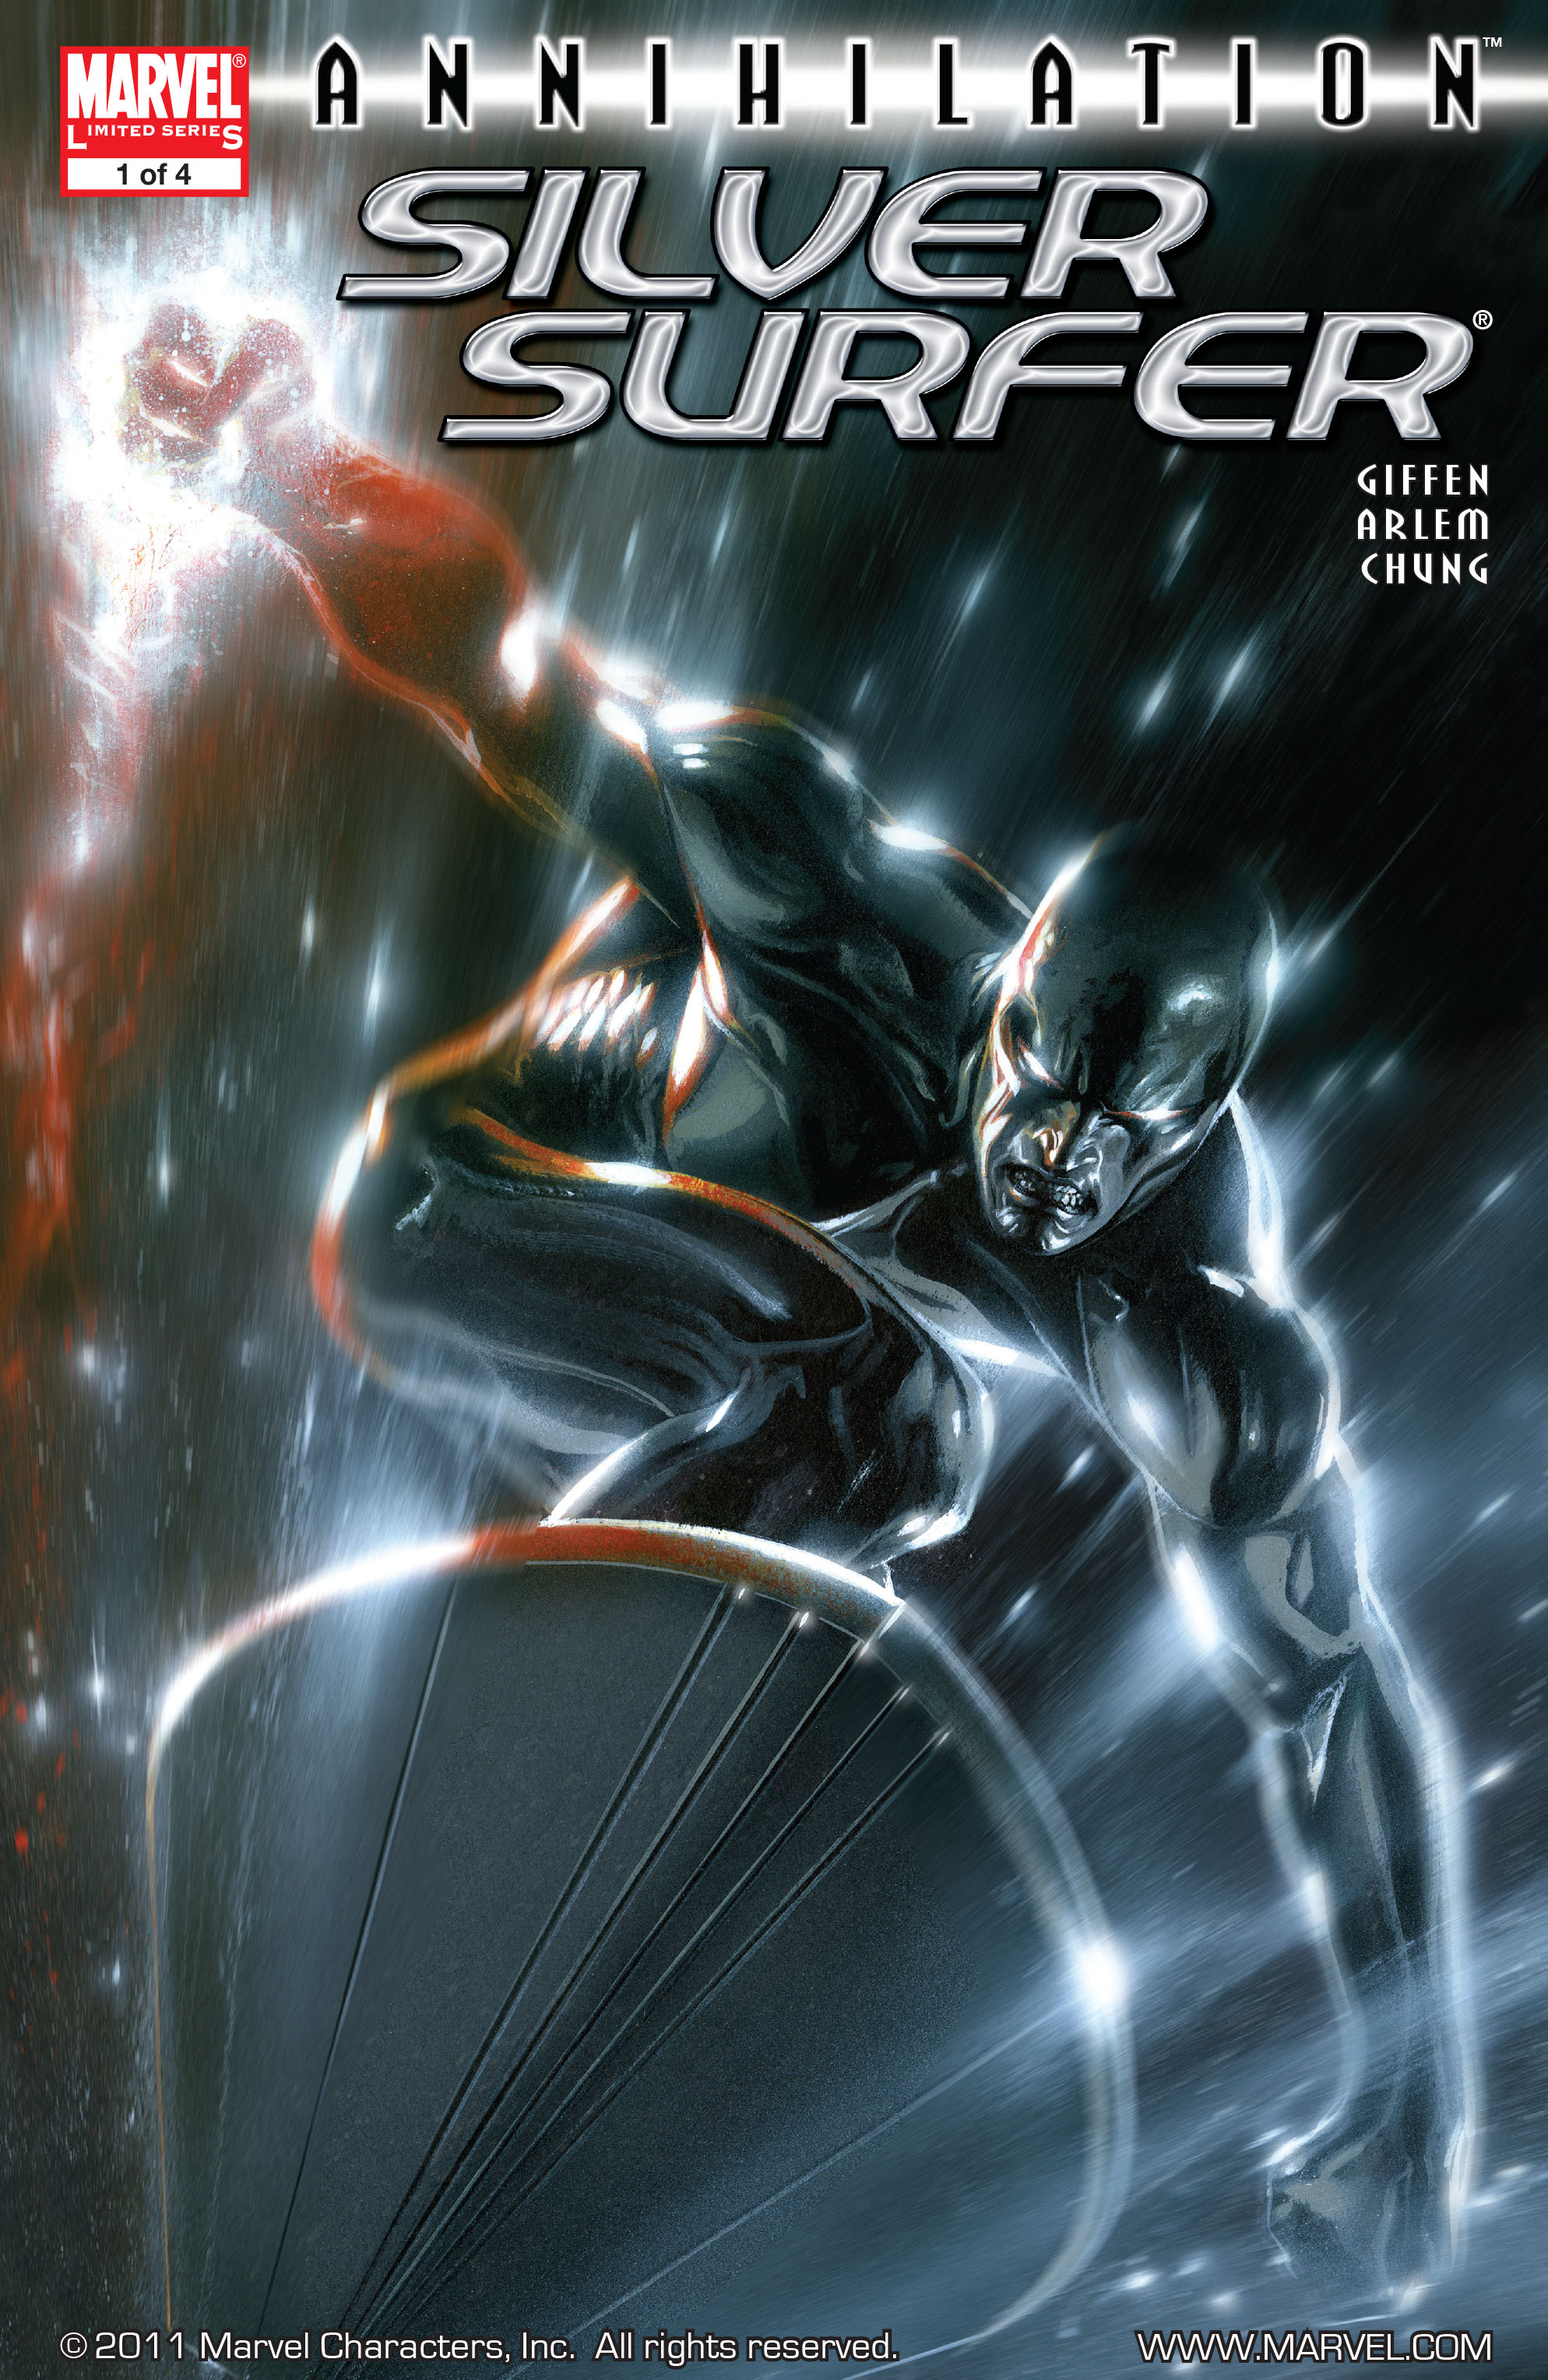 Read online Annihilation: Silver Surfer comic -  Issue #1 - 1